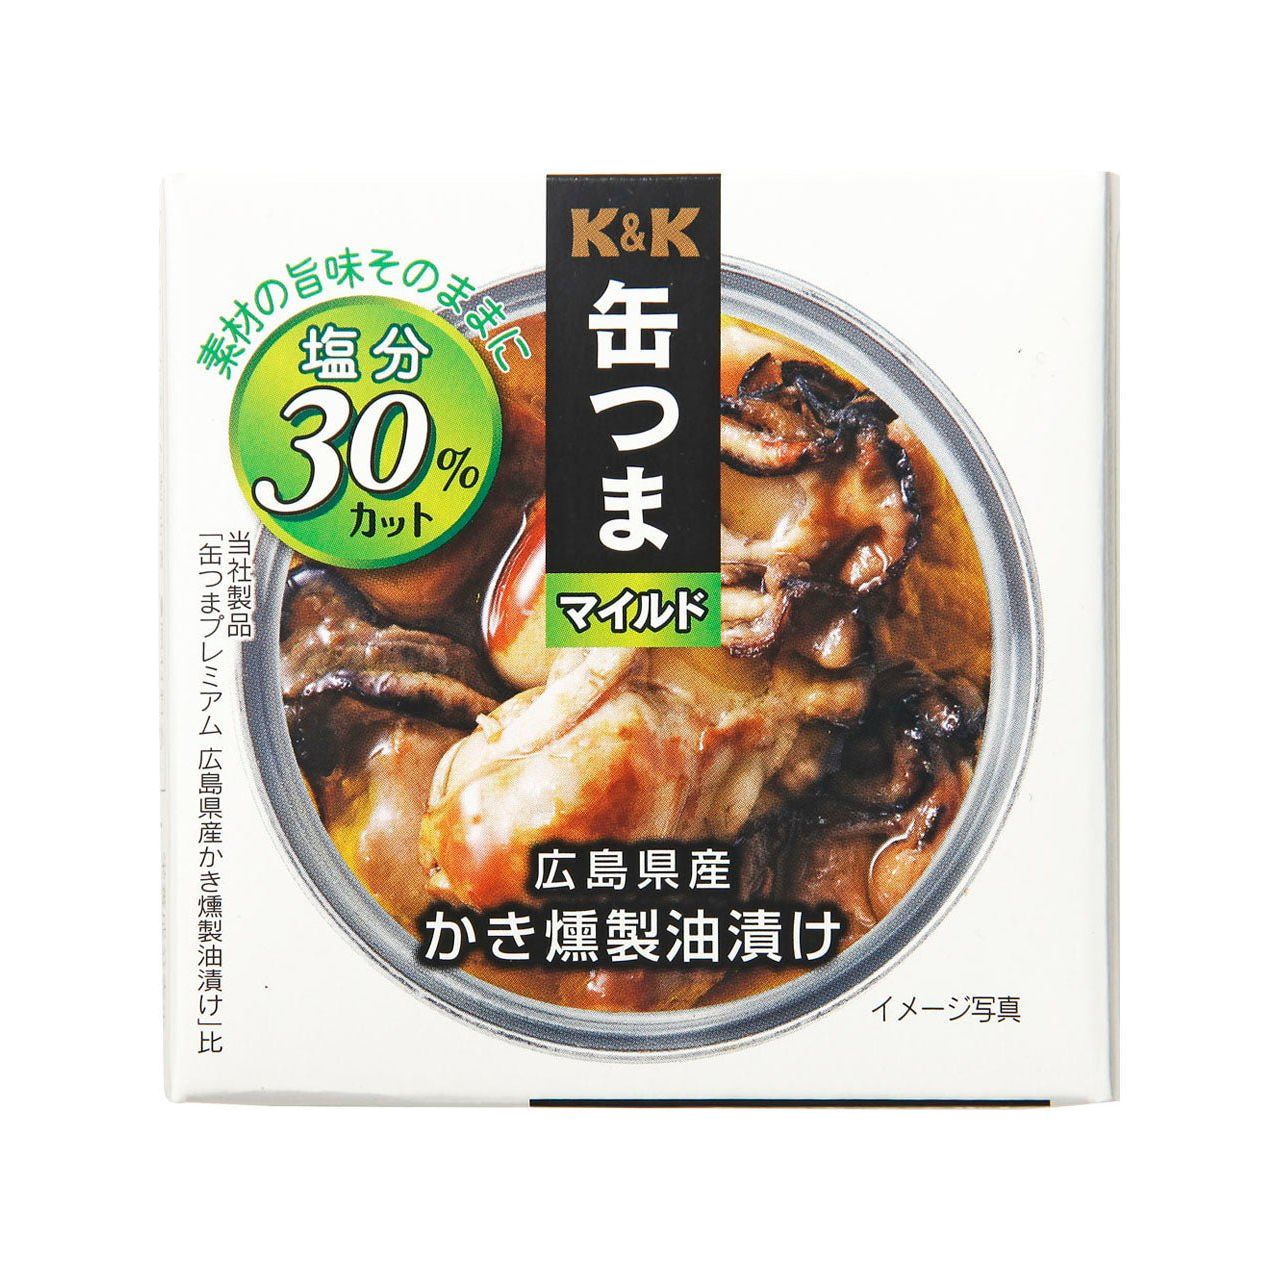 K&K 缶つまマイルド 広島県産かき燻製油漬け